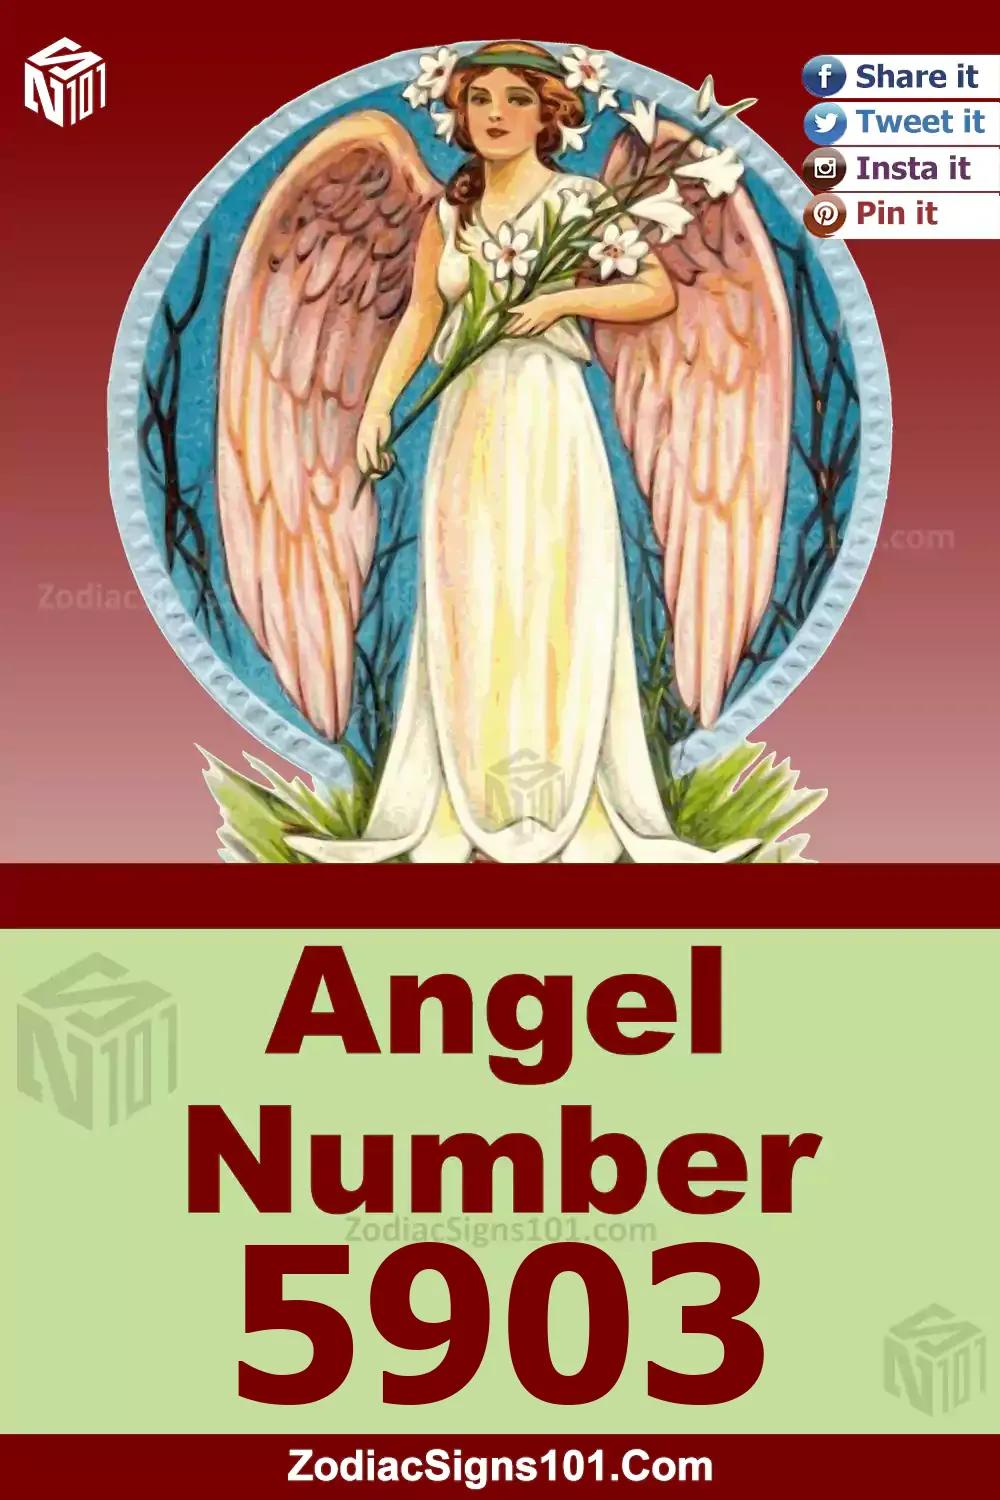 5903-Angel-Number-Meaning.jpg